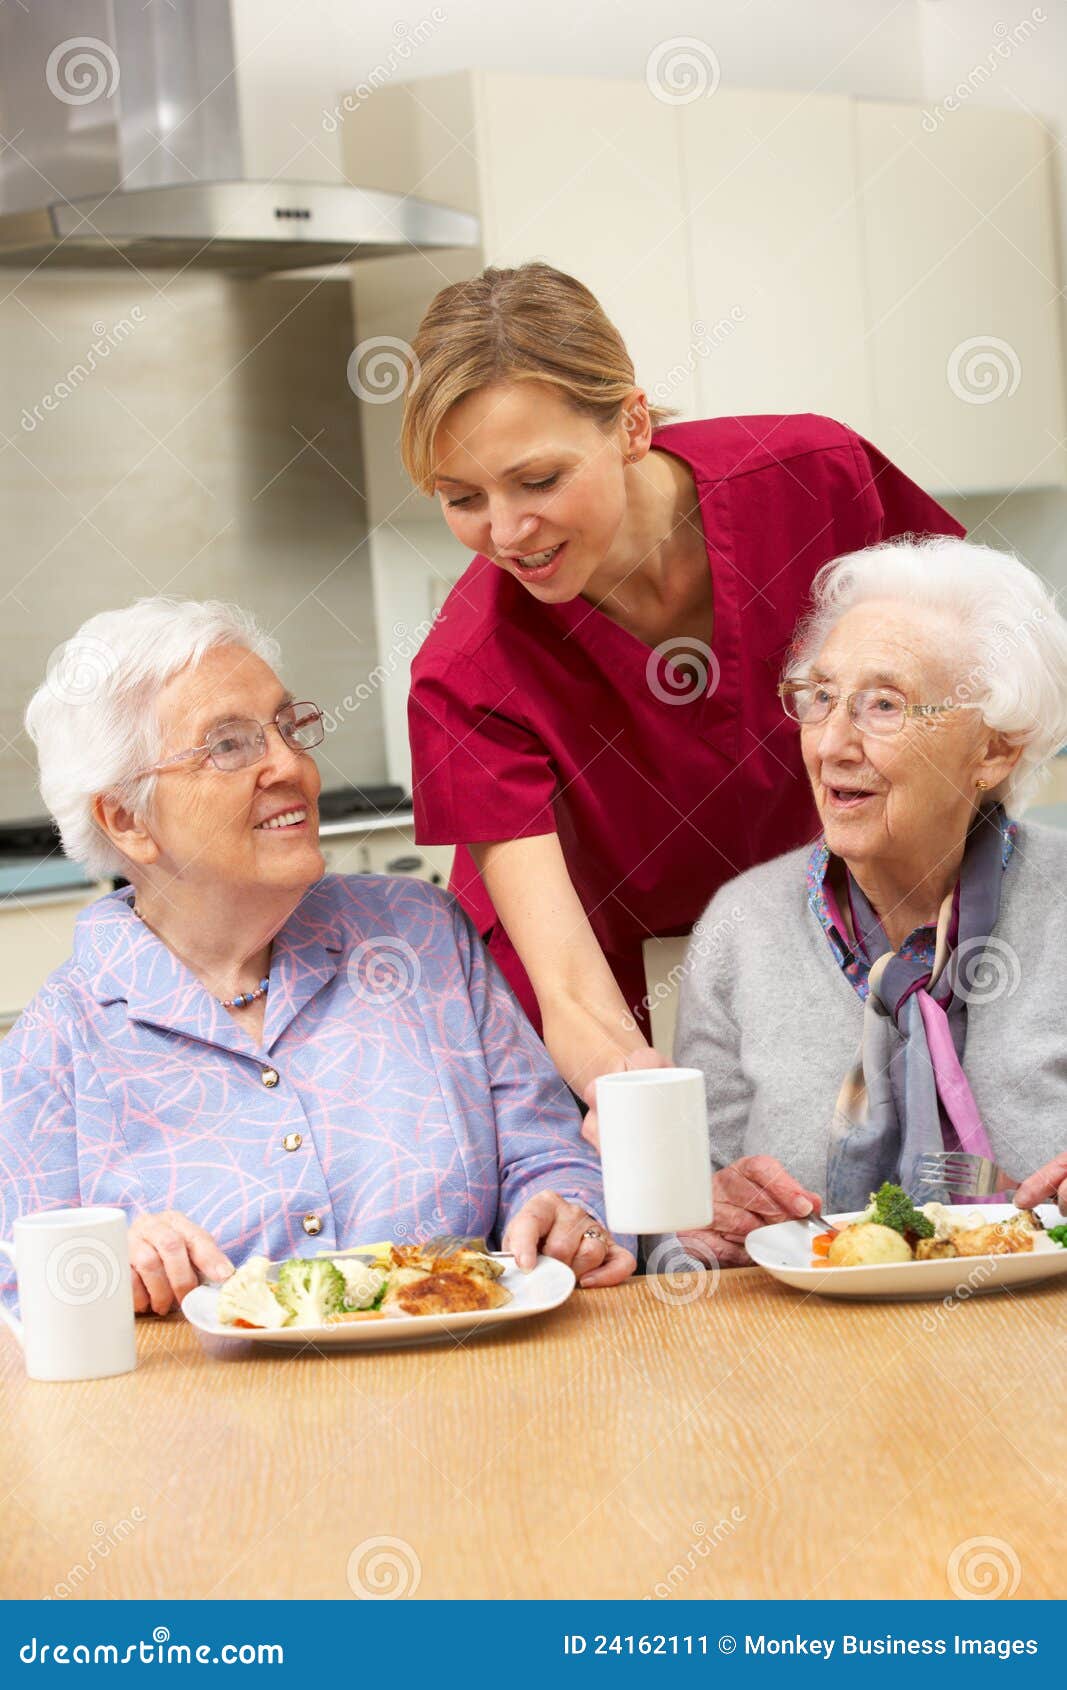 senior women with carer enjoying meal at home